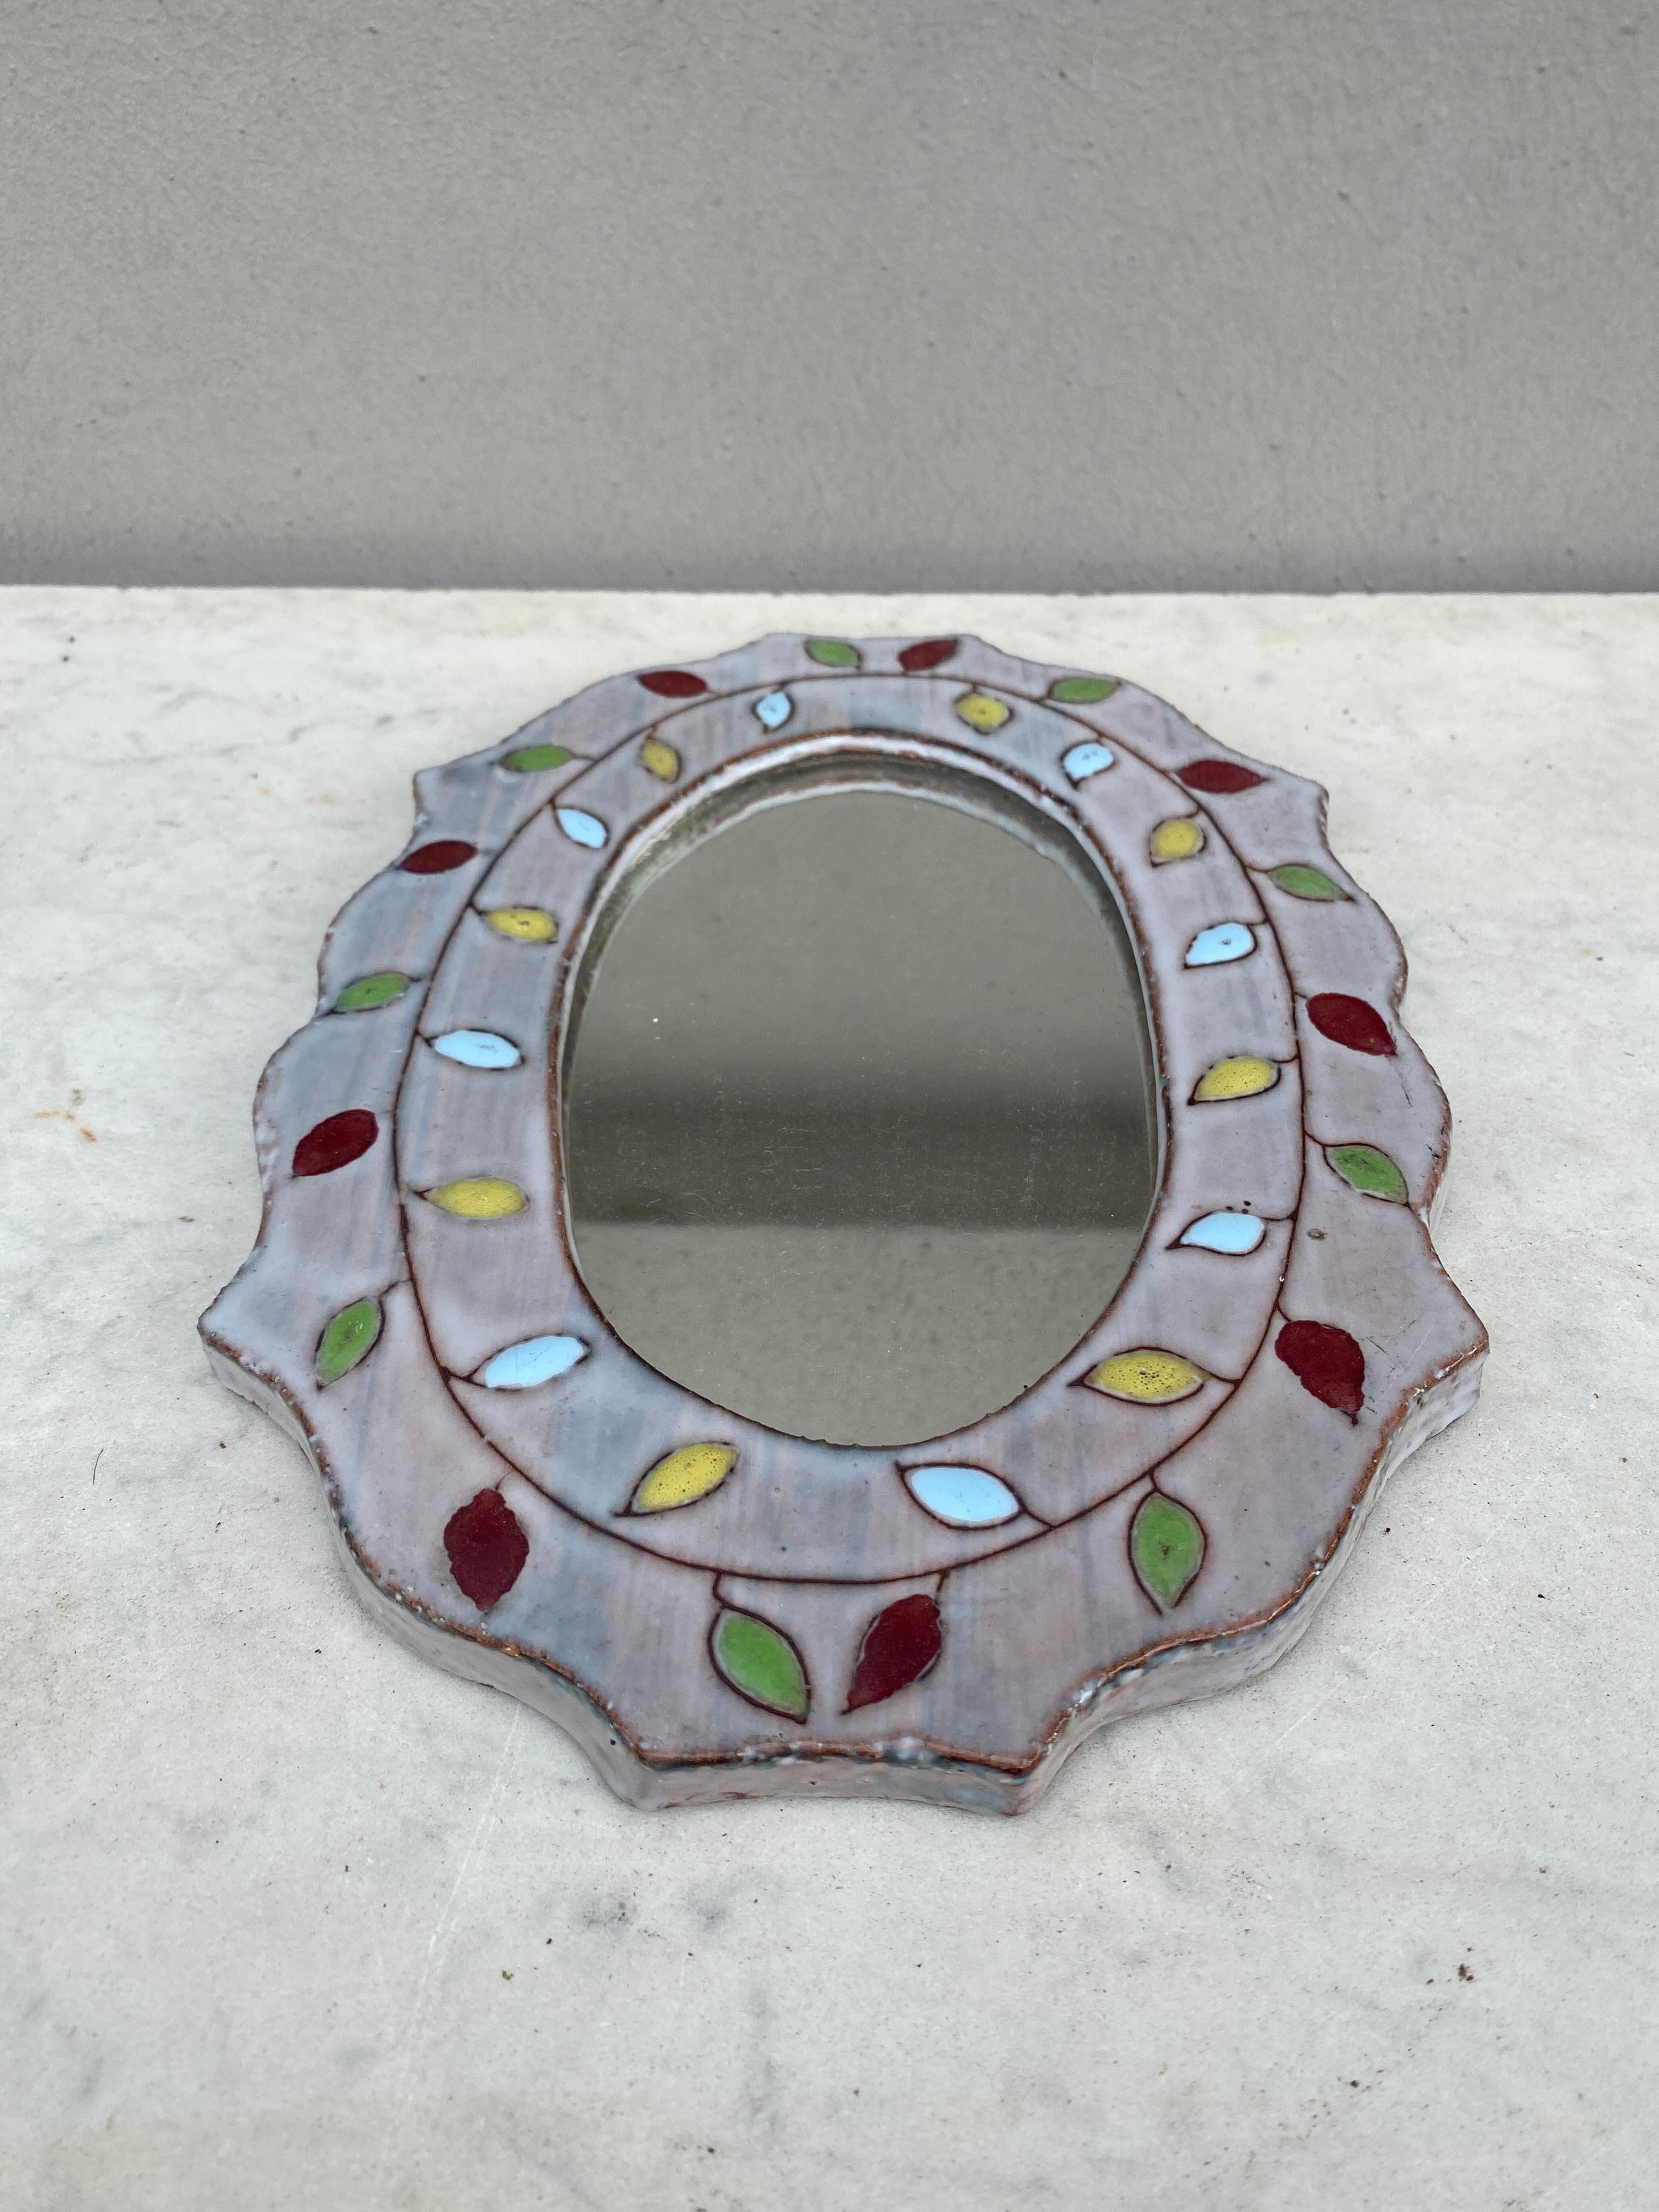 Mid-Century Französisch Keramik Blätter Oval Spiegel.
Höhe / 9,8 Zoll.